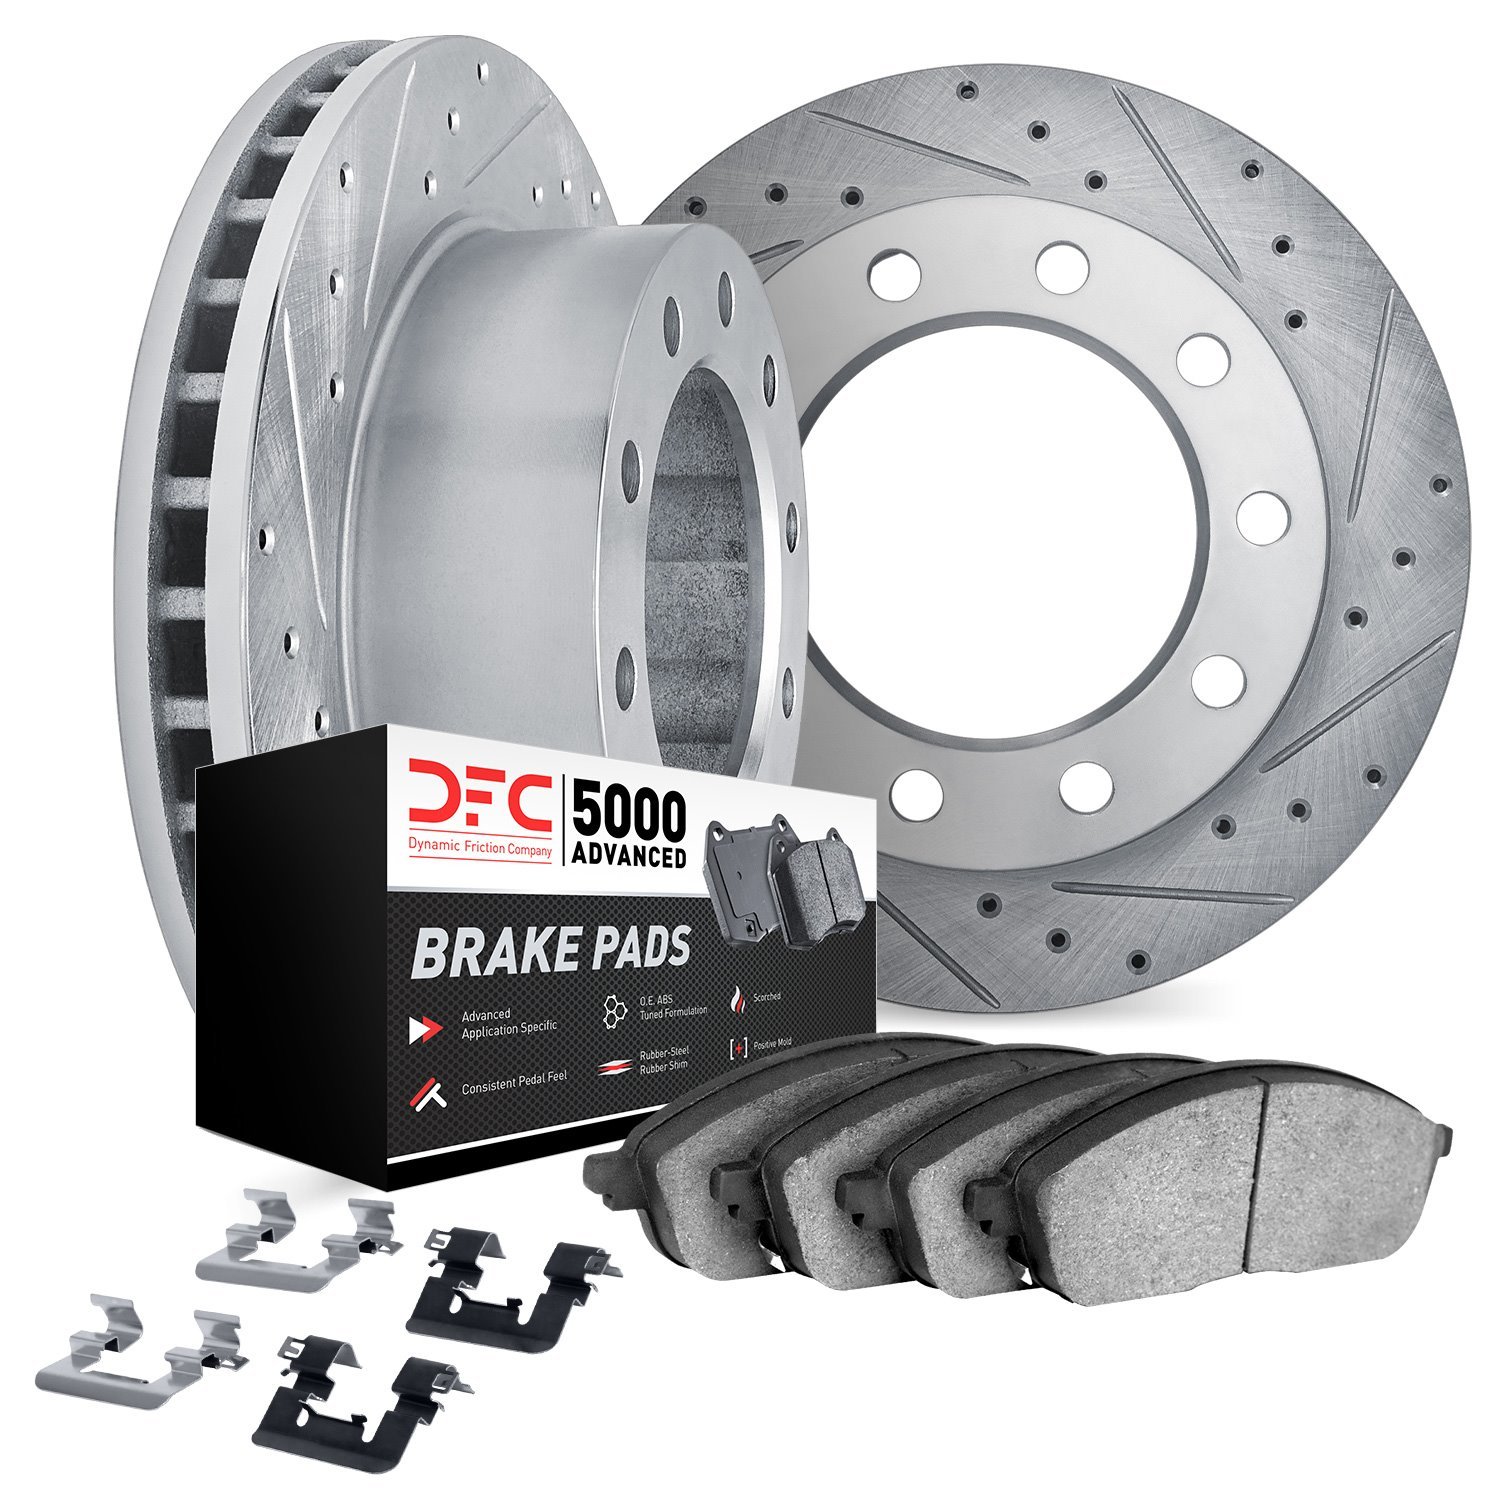 7512-99771 Drilled/Slotted Brake Rotors w/5000 Advanced Brake Pads Kit & Hardware [Silver], Fits Select Multiple Makes/Models, P